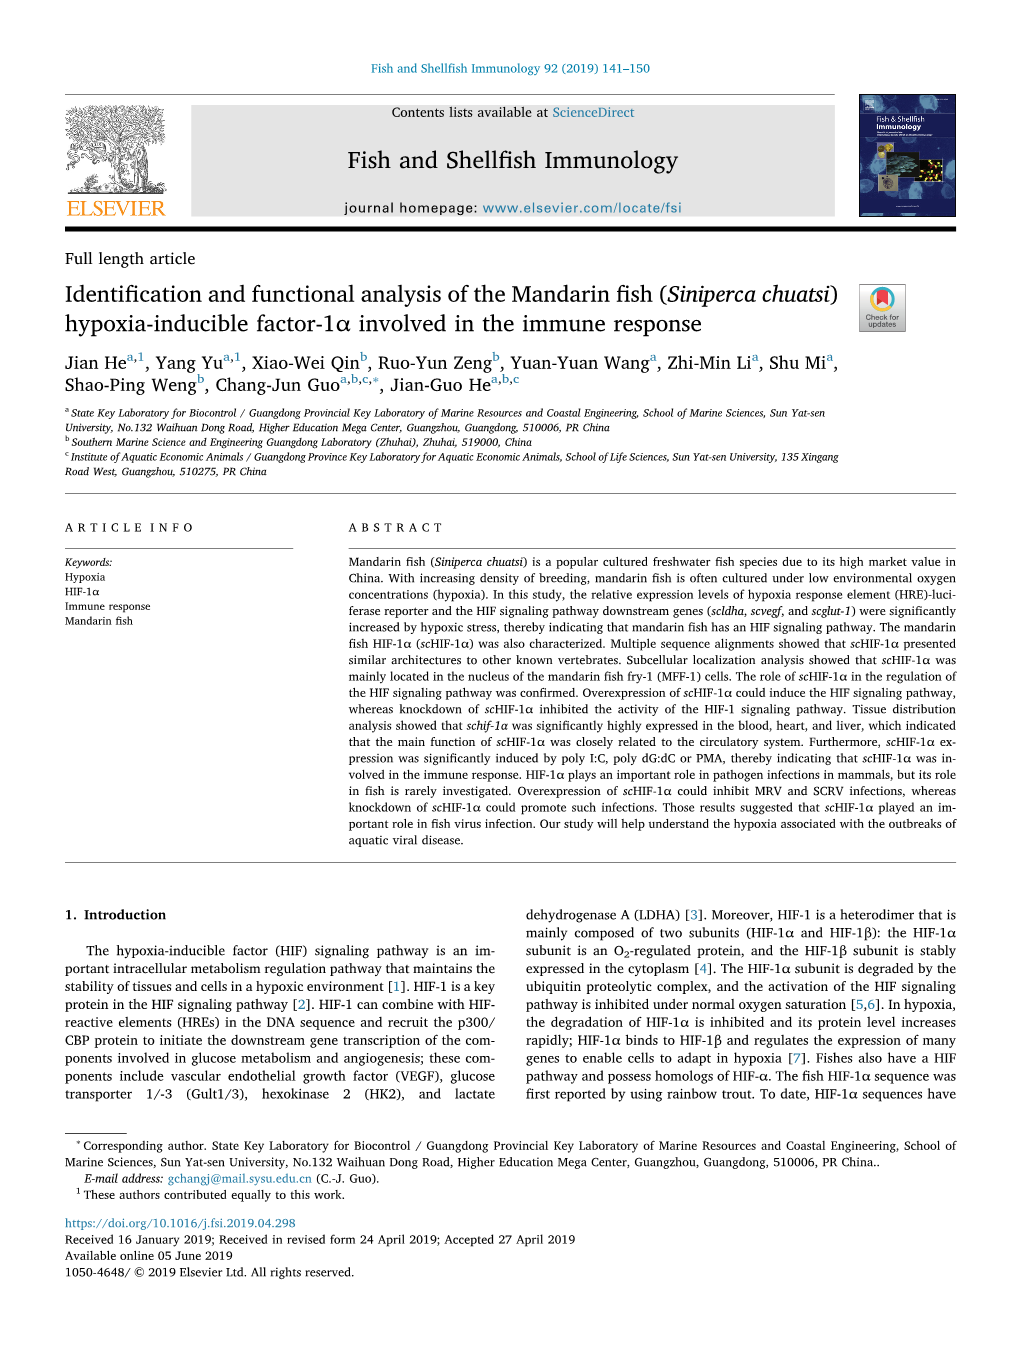 Identification and Functional Analysis of the Mandarin Fish (Siniperca